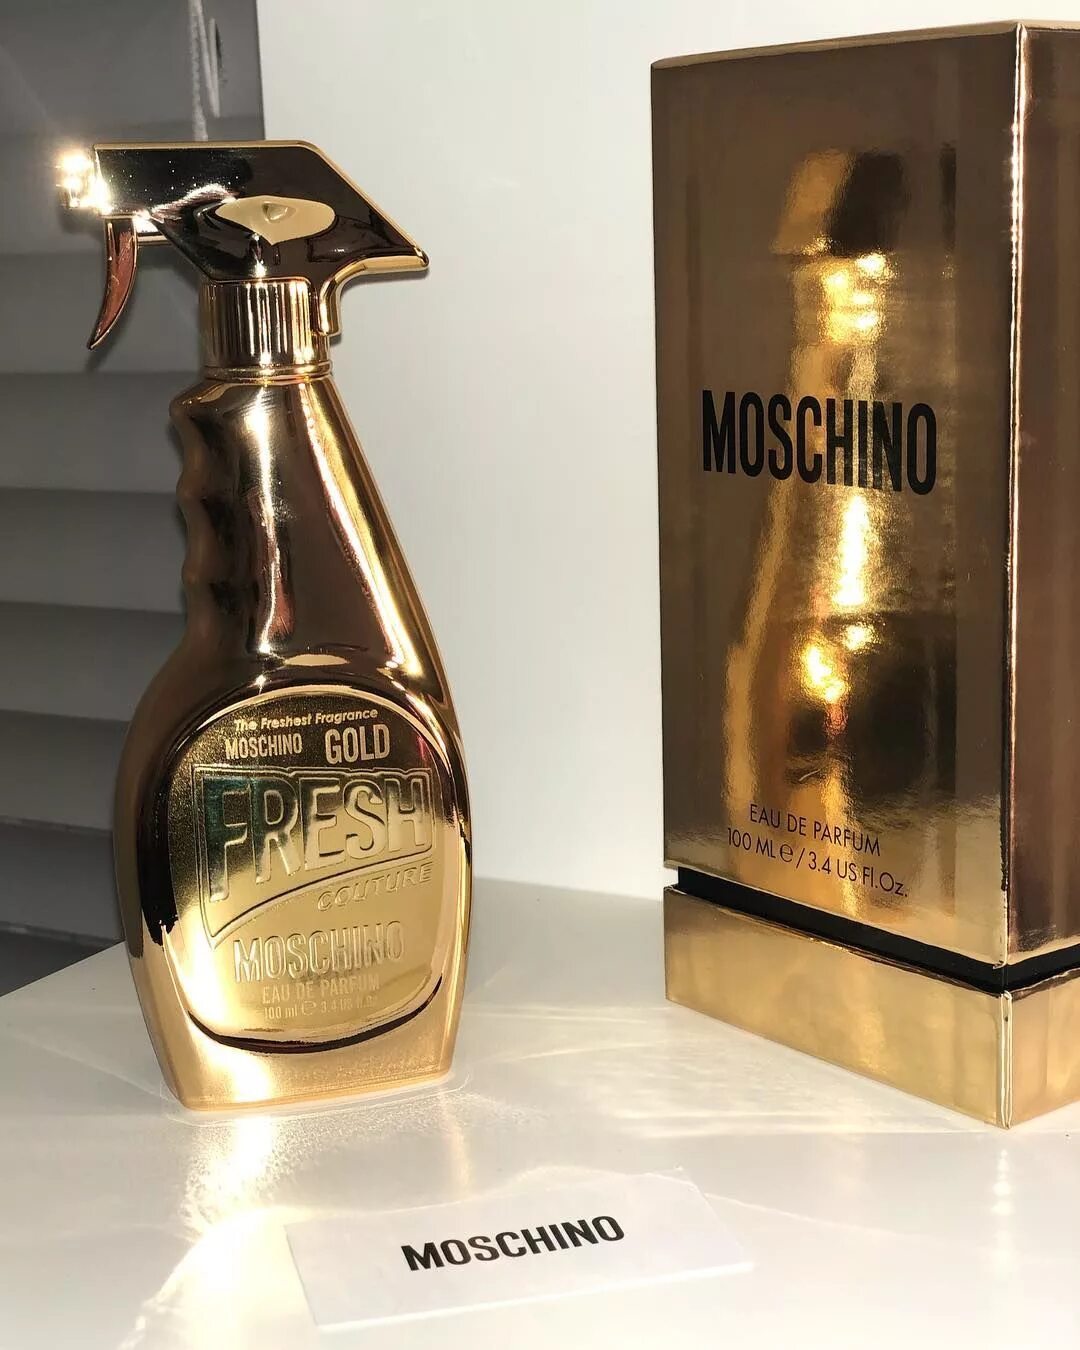 Moschino Fresh Gold 100 мл. Moschino Gold Fresh Couture. Moschino Fresh Gold Eau de Parfum. Gold Fresh Couture Moschino флакон.